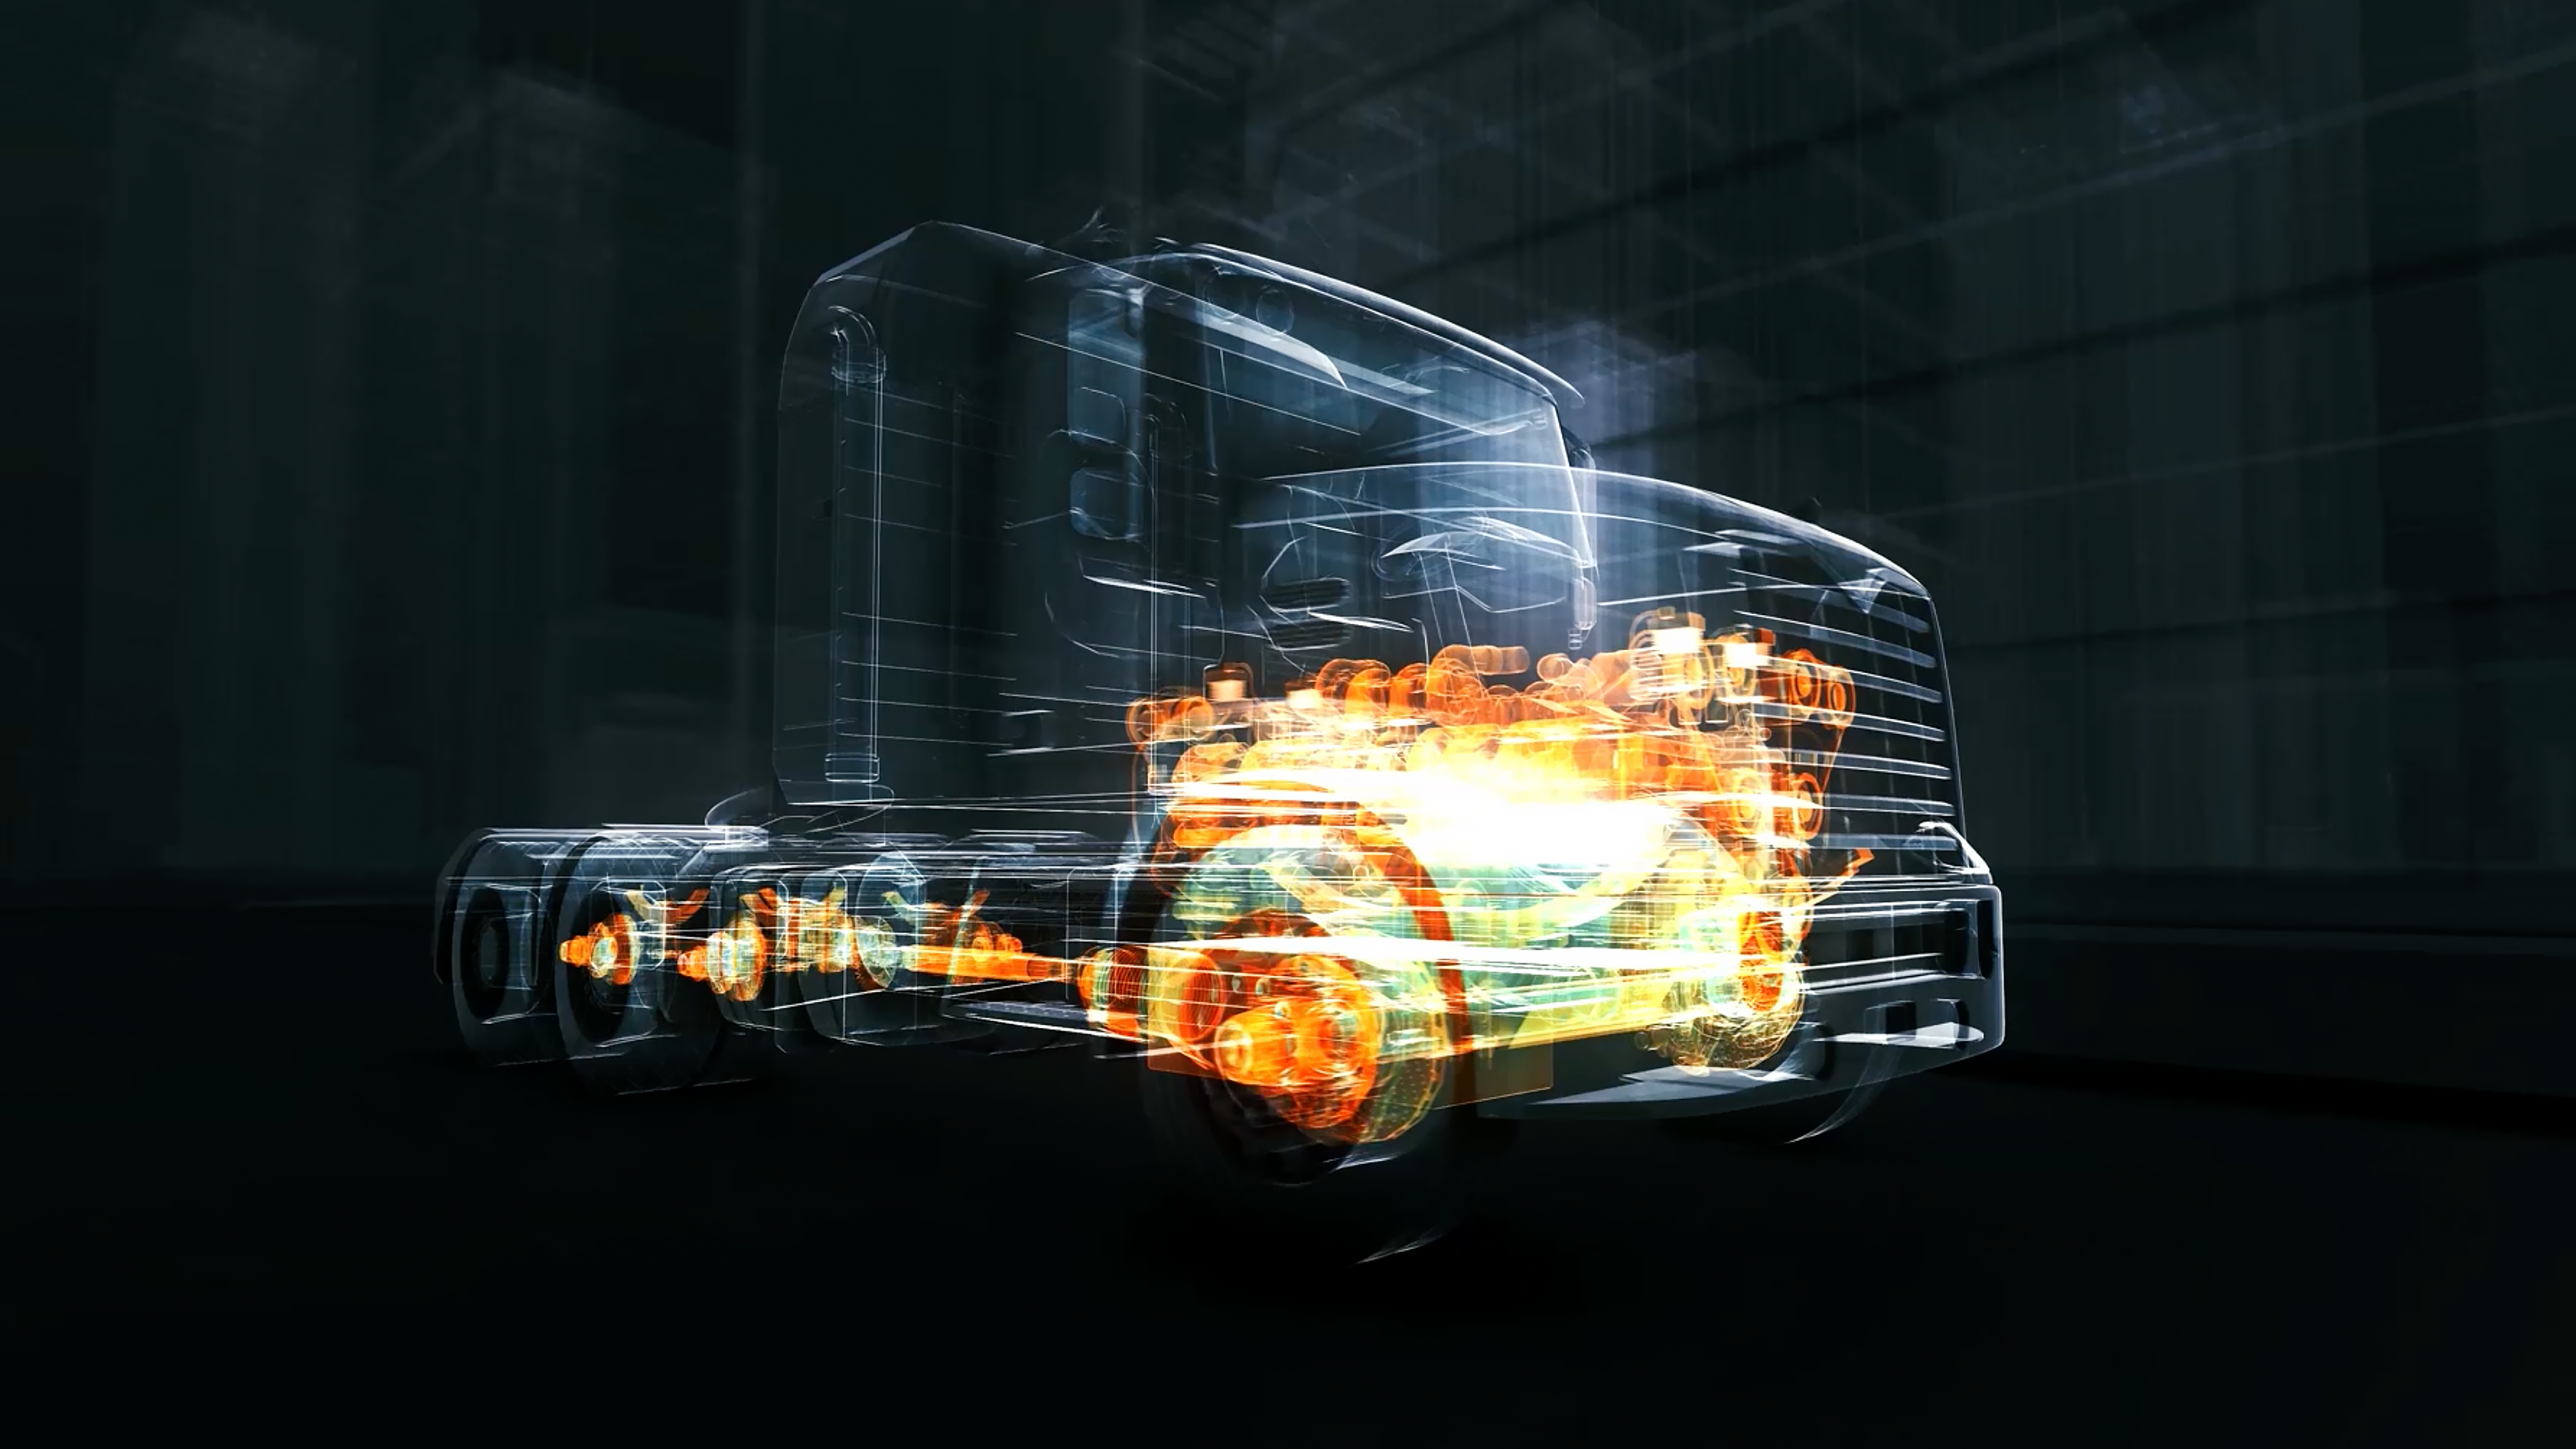 Truck Animation Image